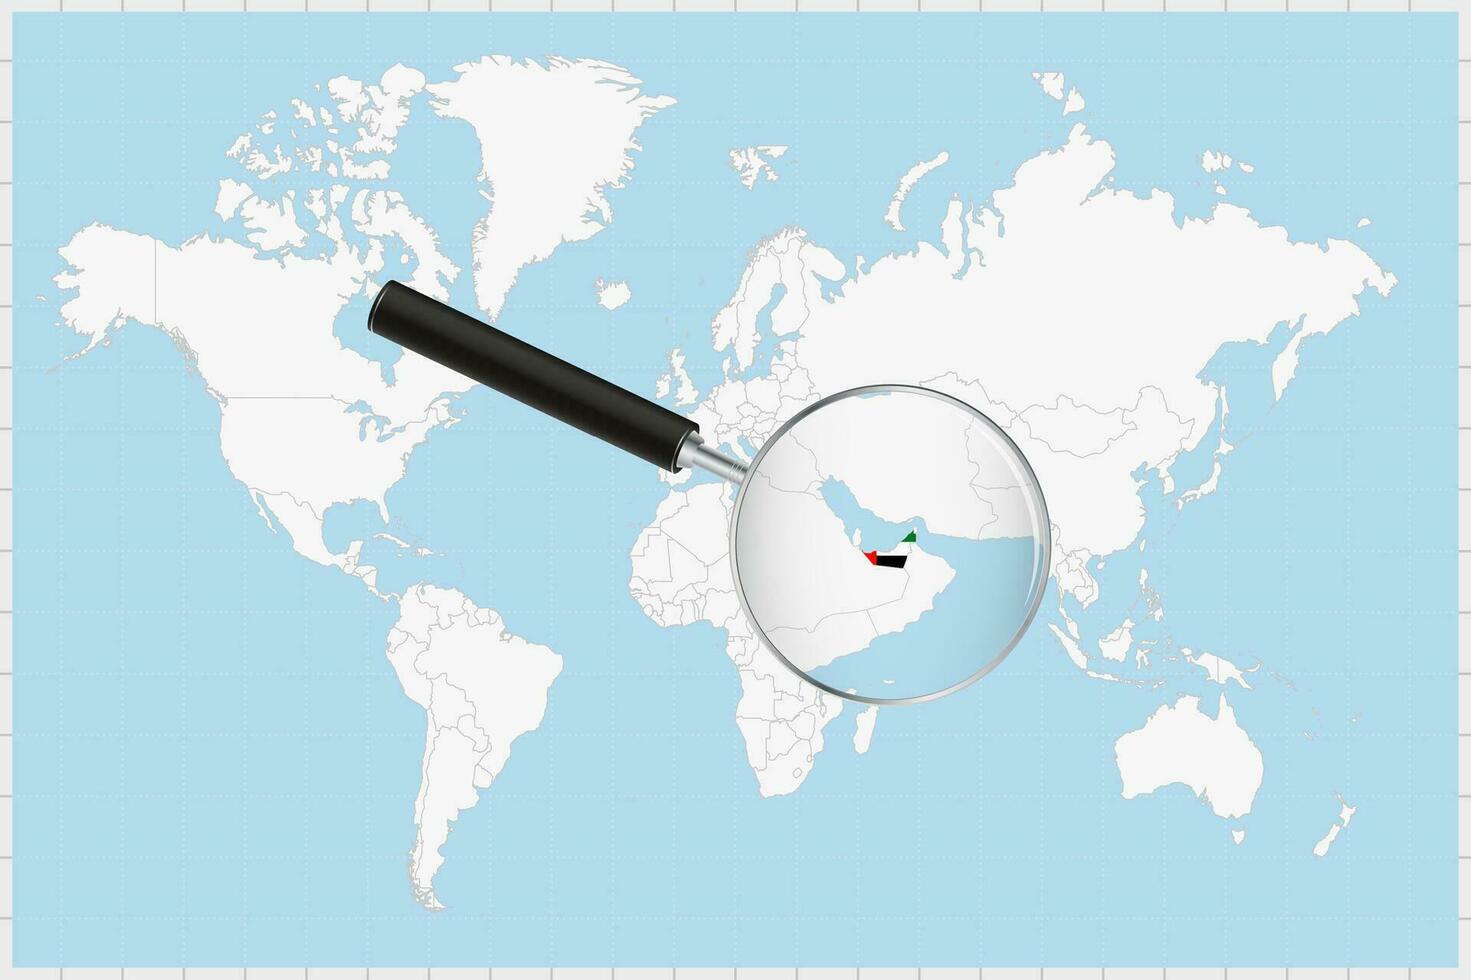 aumentador vaso demostración un mapa de unido árabe emiratos en un mundo mapa. vector